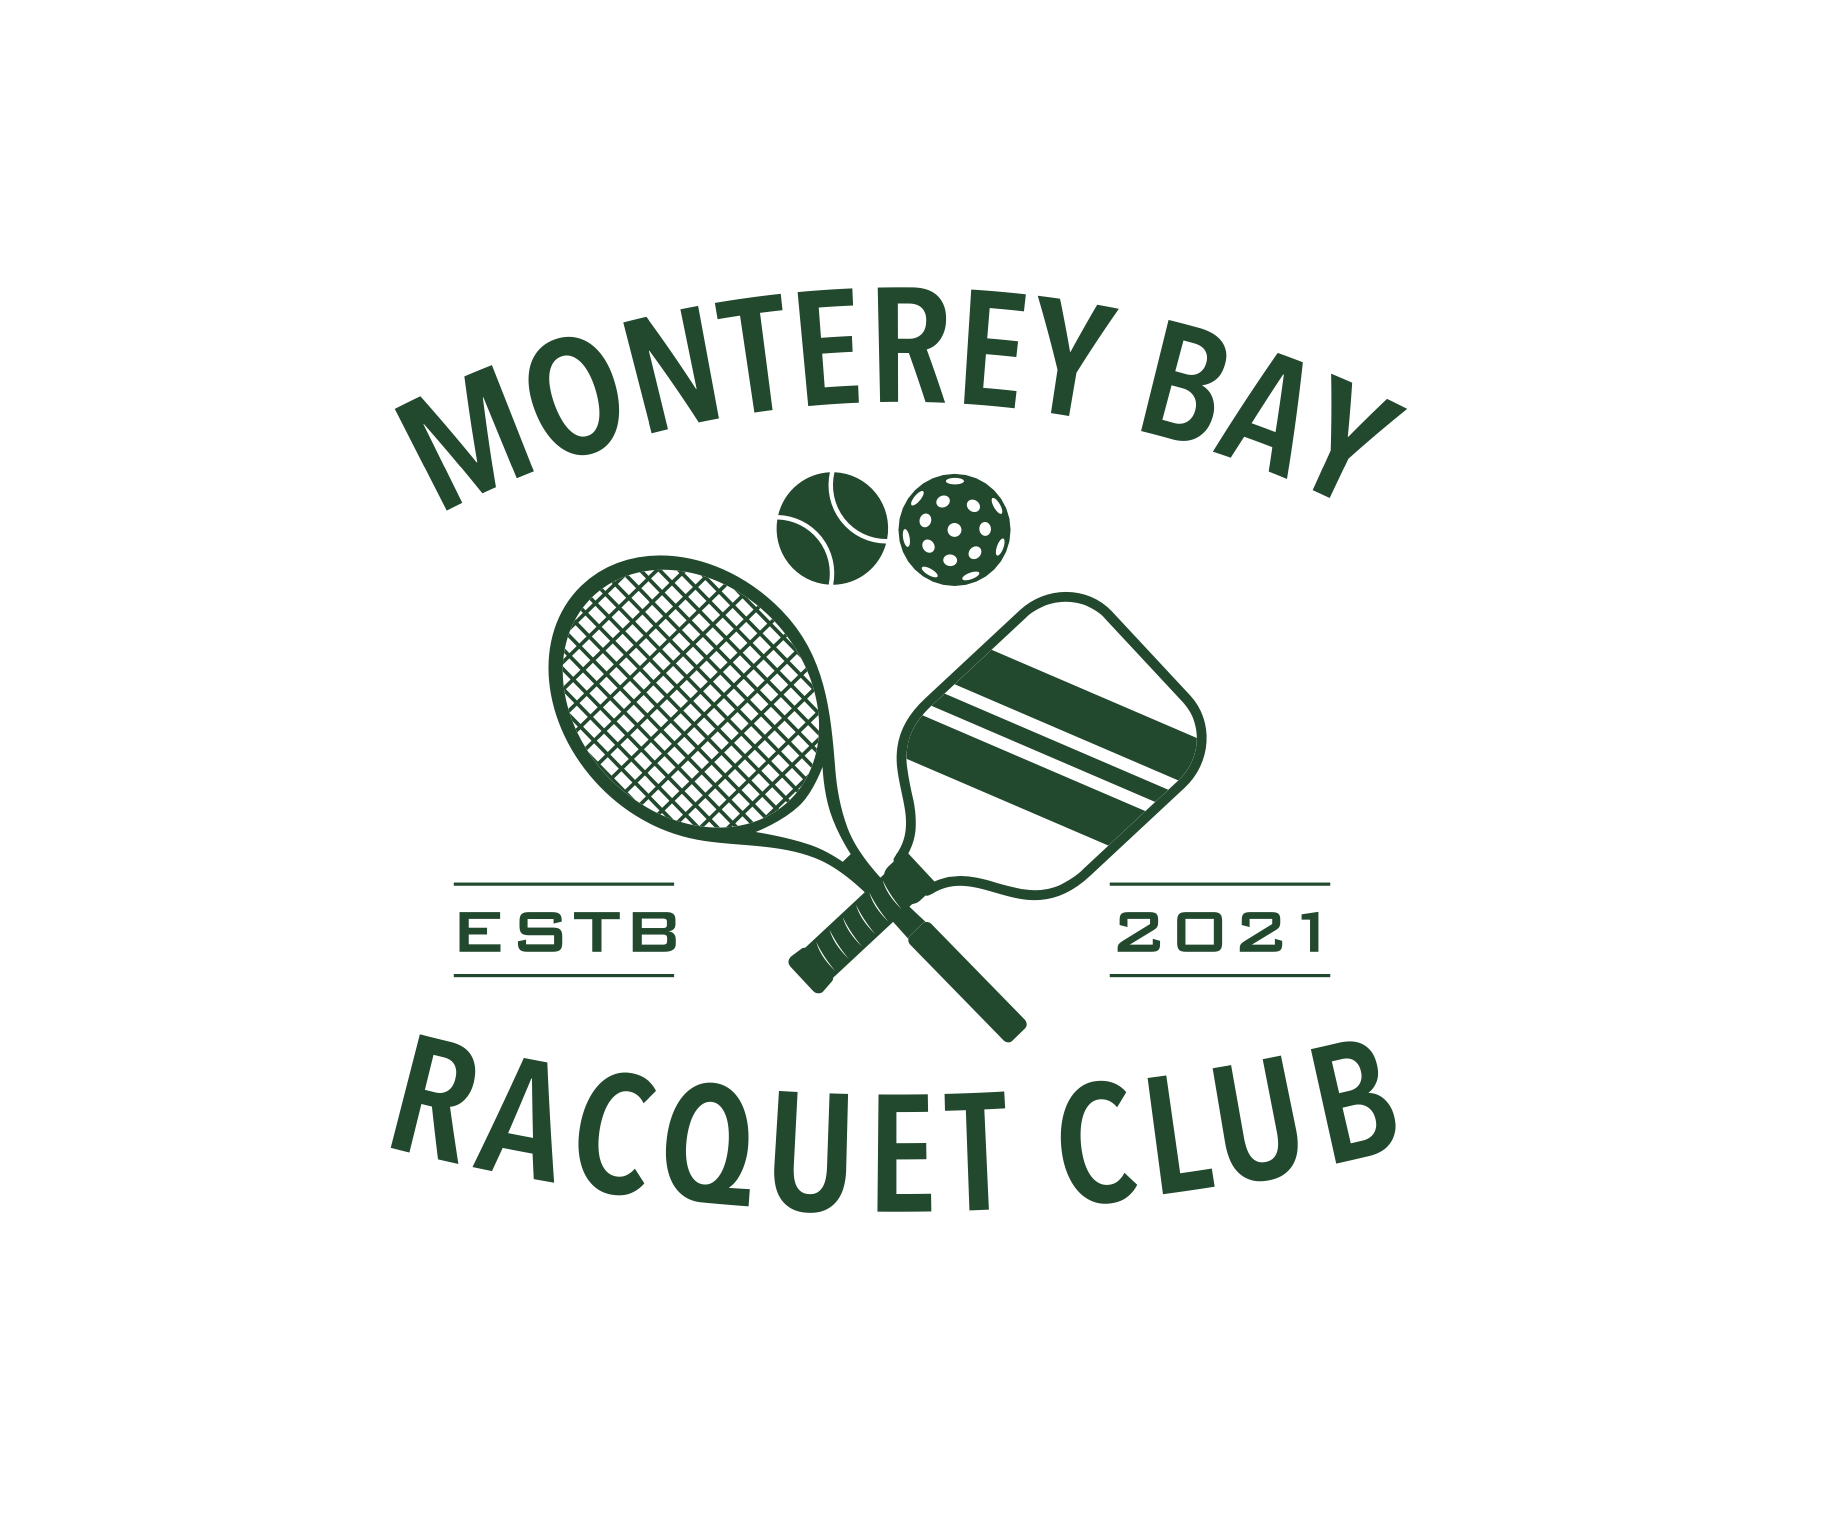 Monterey Bay Racquet Club